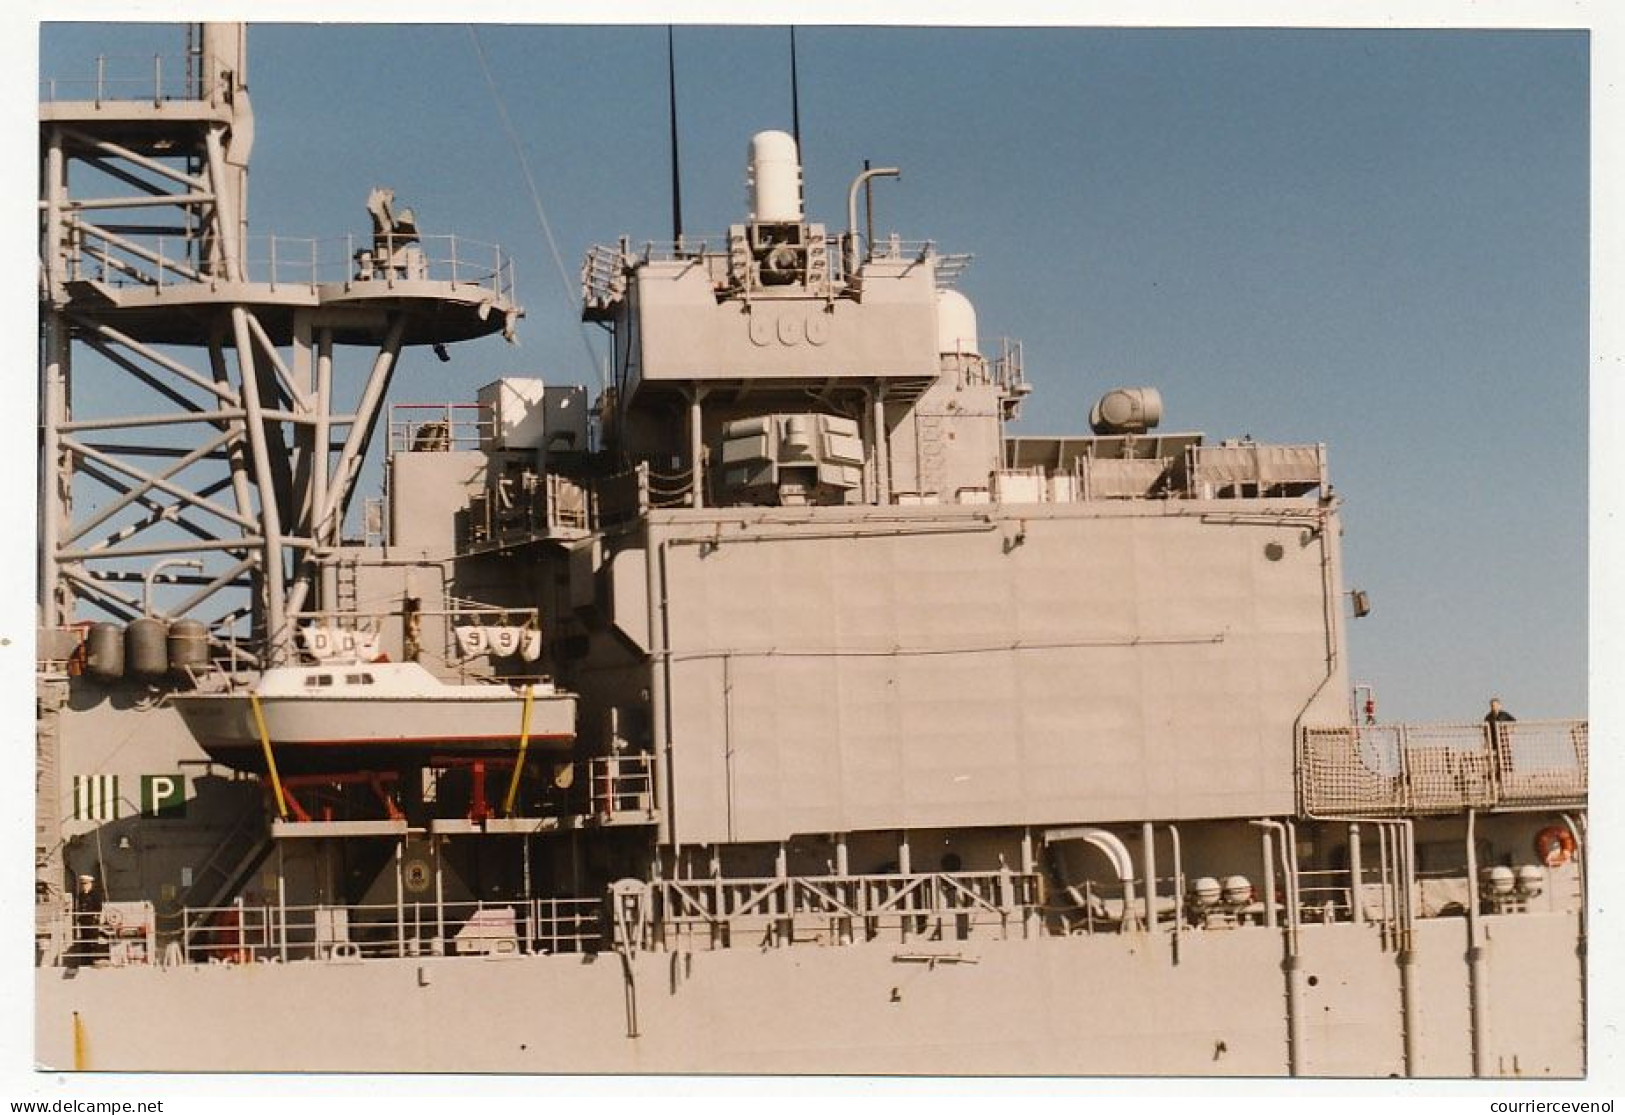 8 photos couleur format env. 10cm X 15cm - U.S. Navy destroyer USS Hayler (DD 997) - Mars 1997